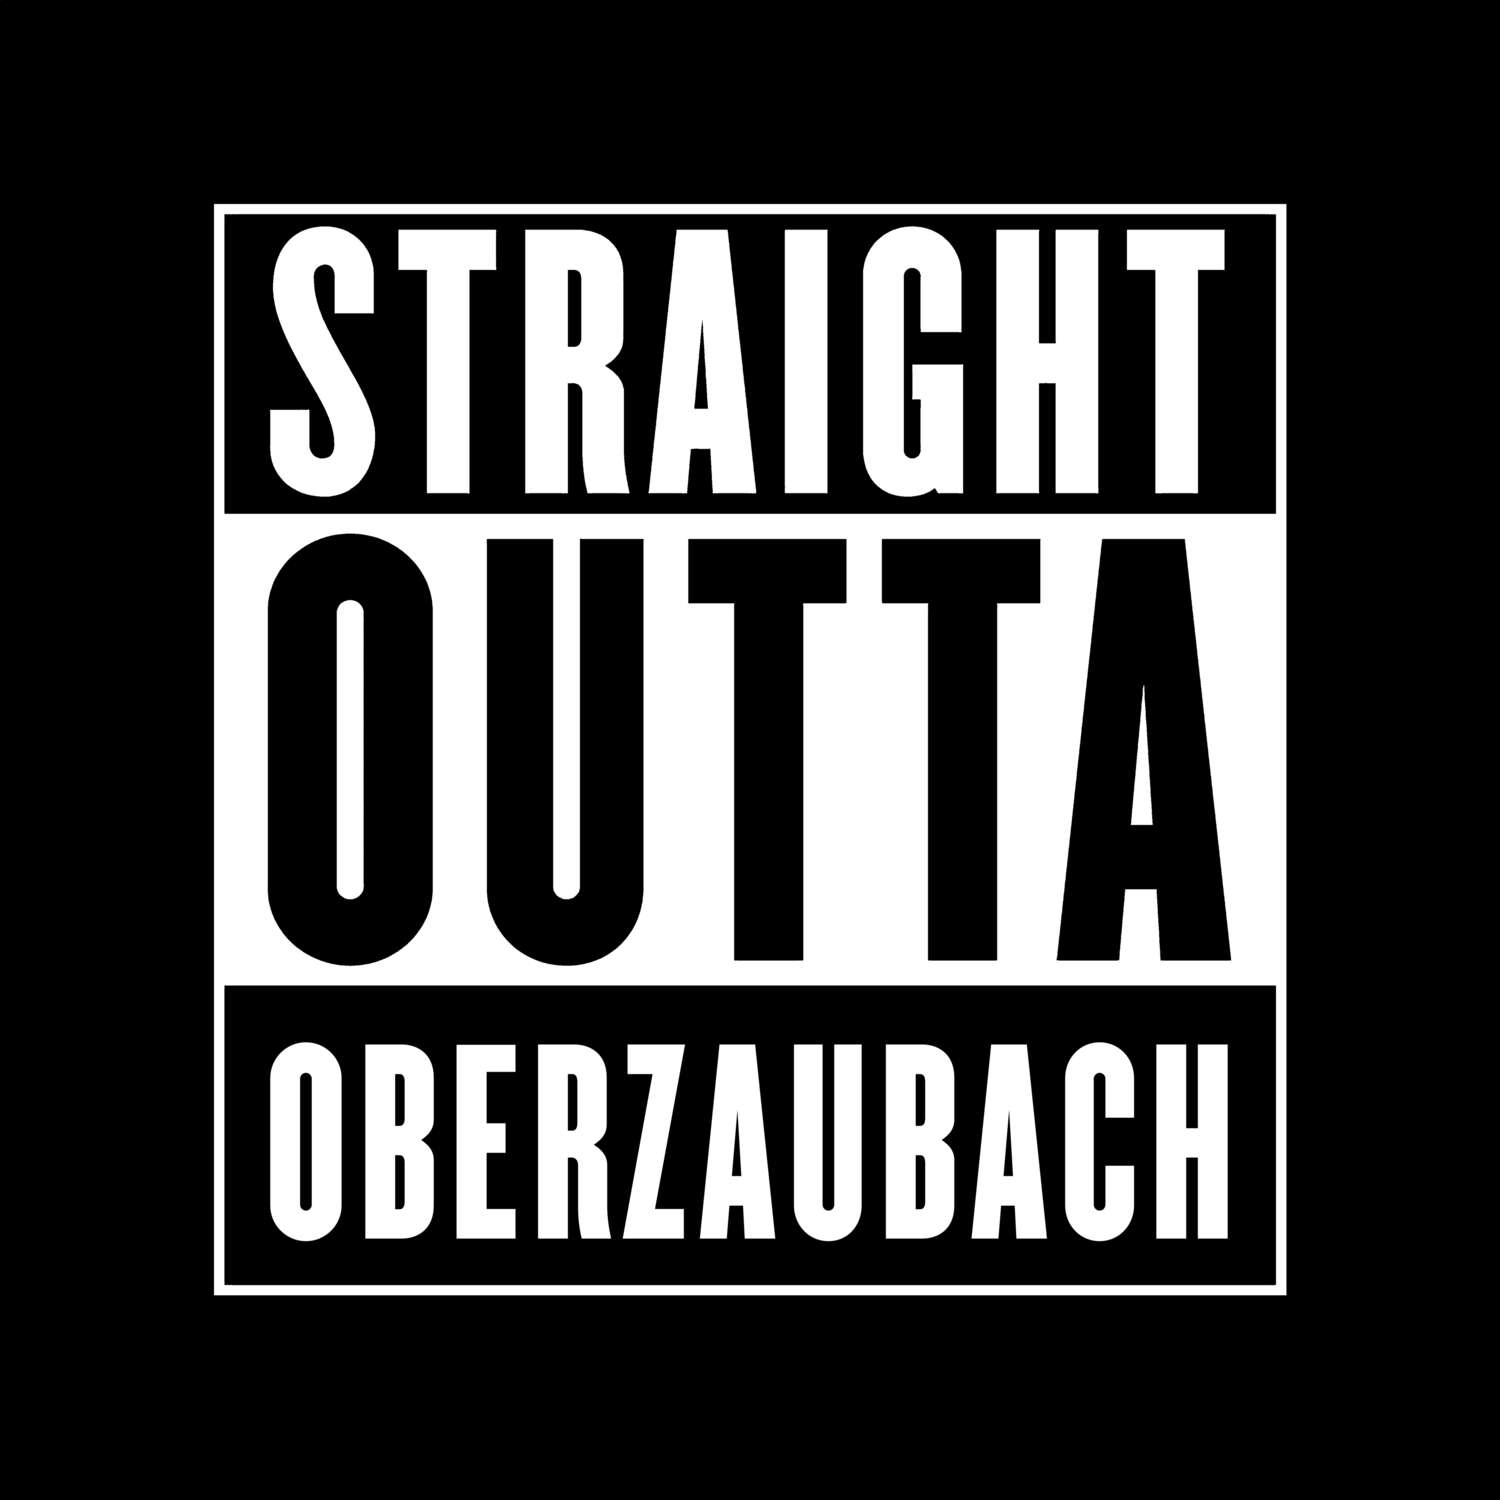 Oberzaubach T-Shirt »Straight Outta«